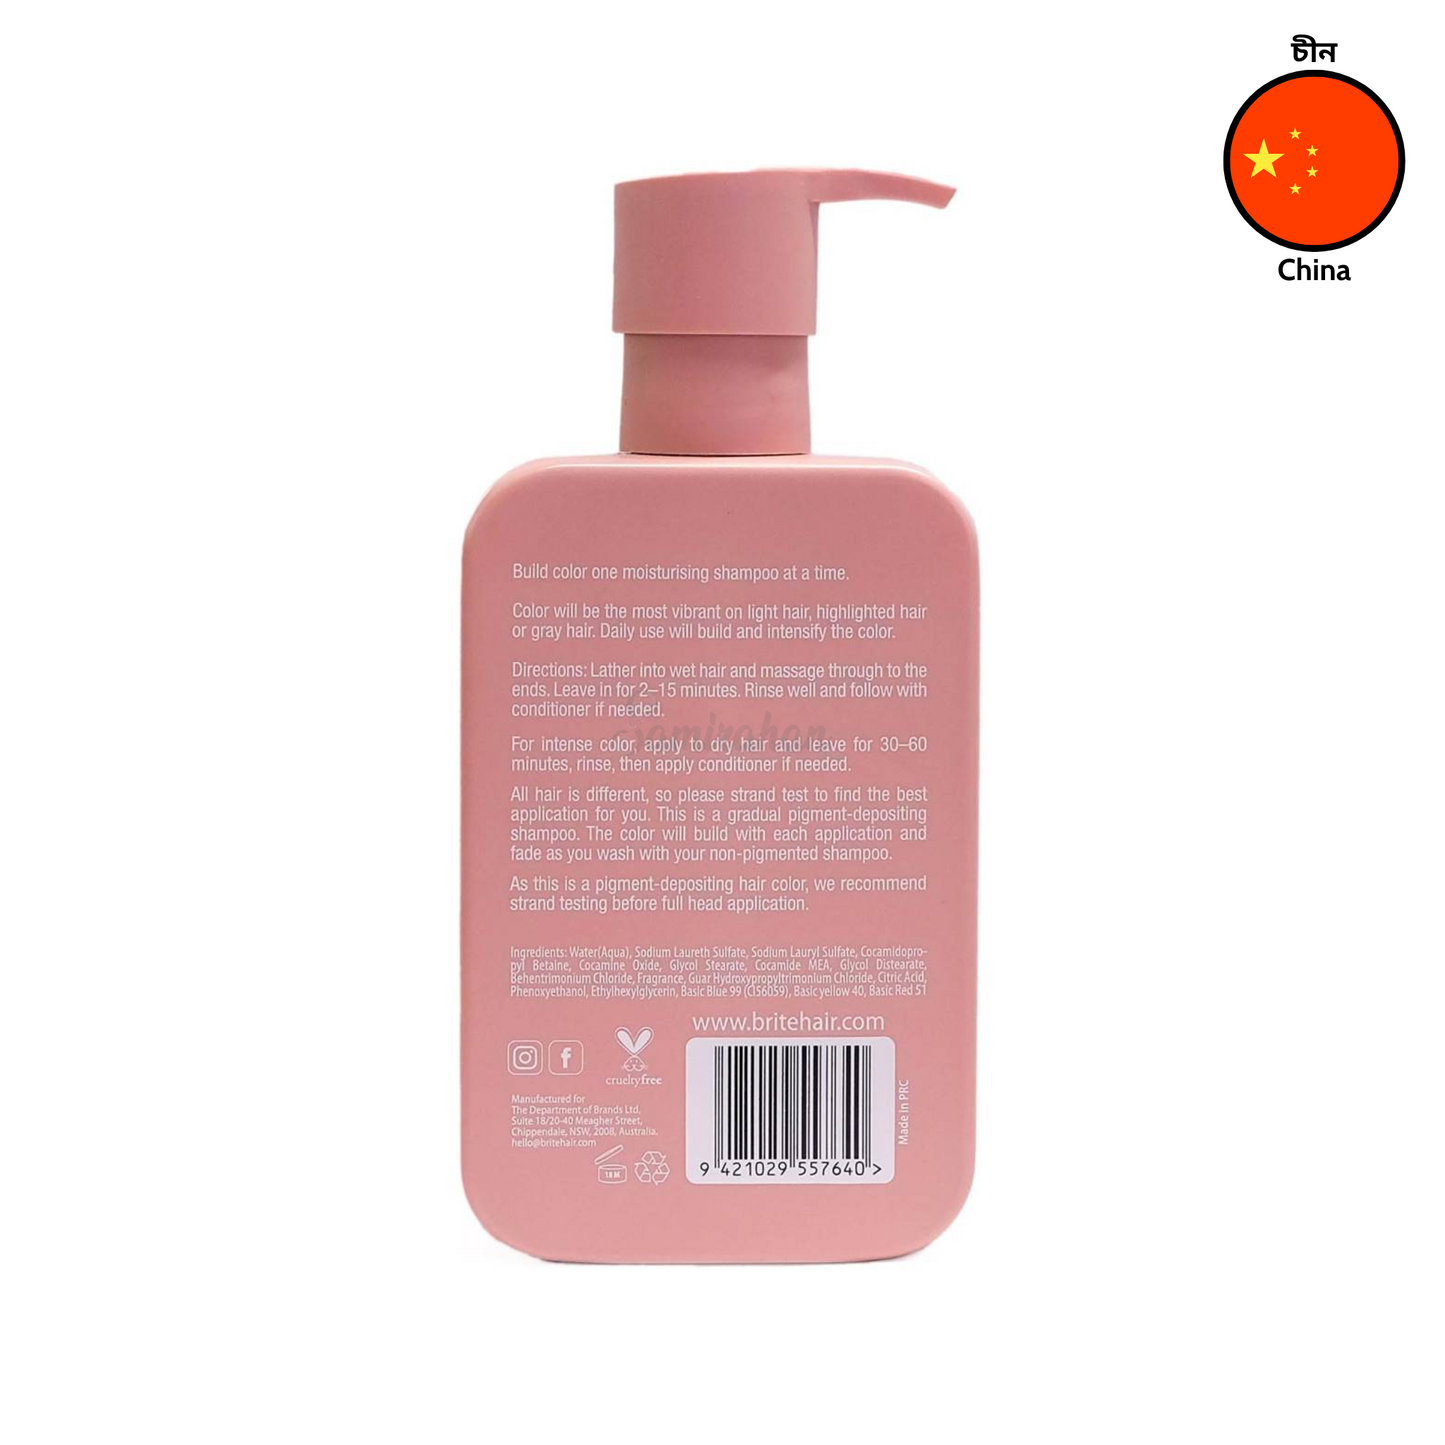 Brite Shampoo Color Rose 300mL